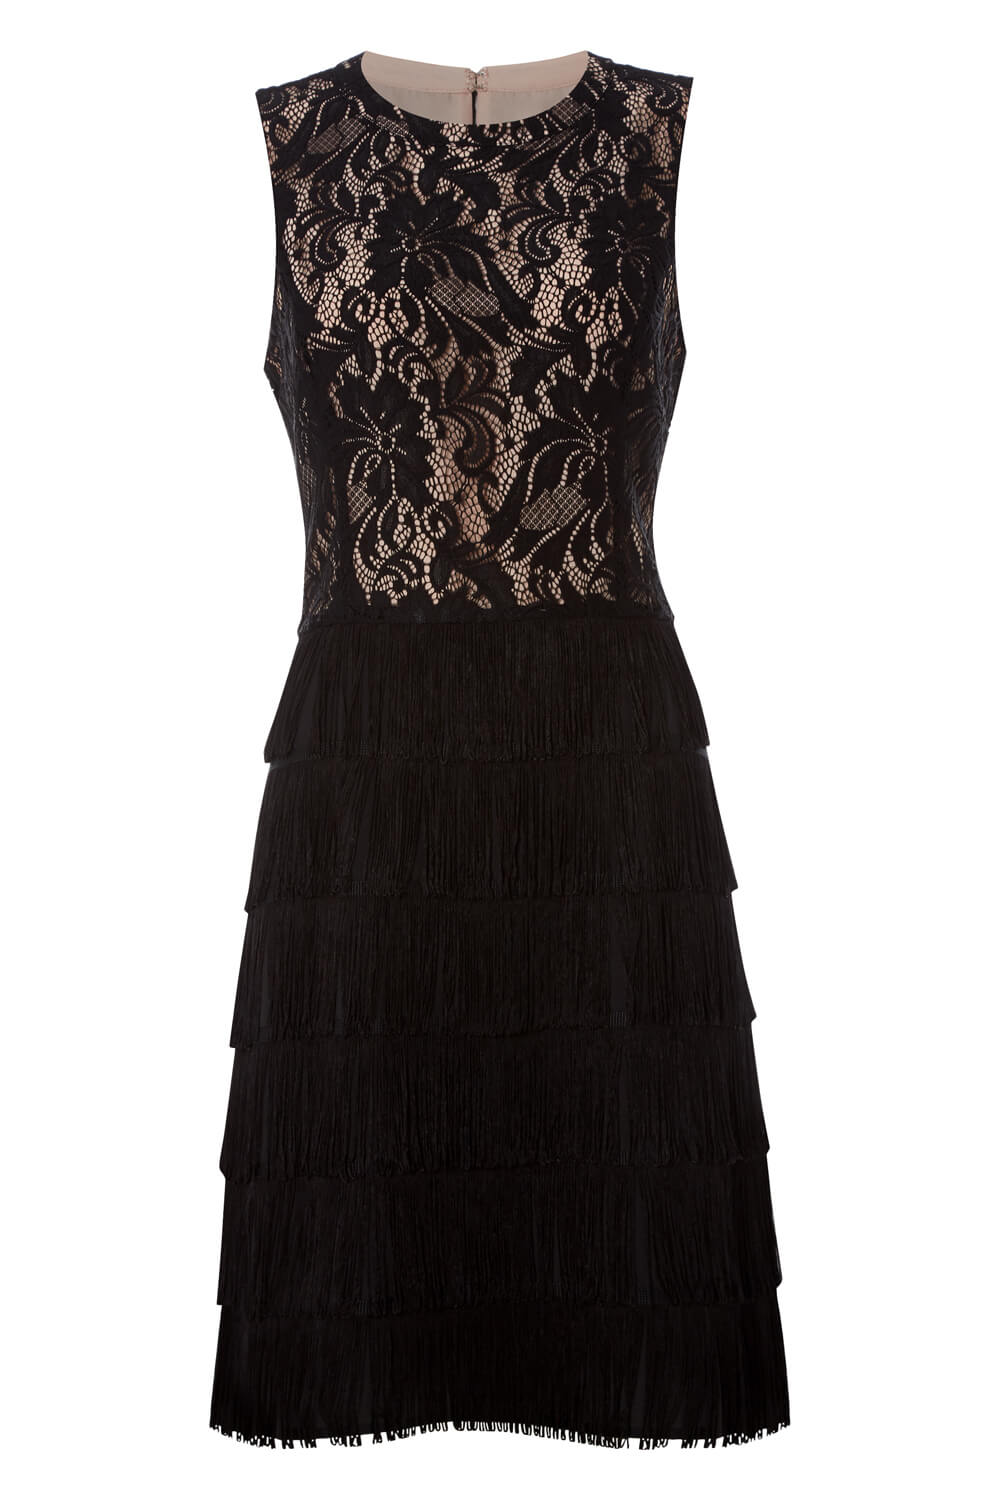 Black Lace Flapper Dress, Image 5 of 5